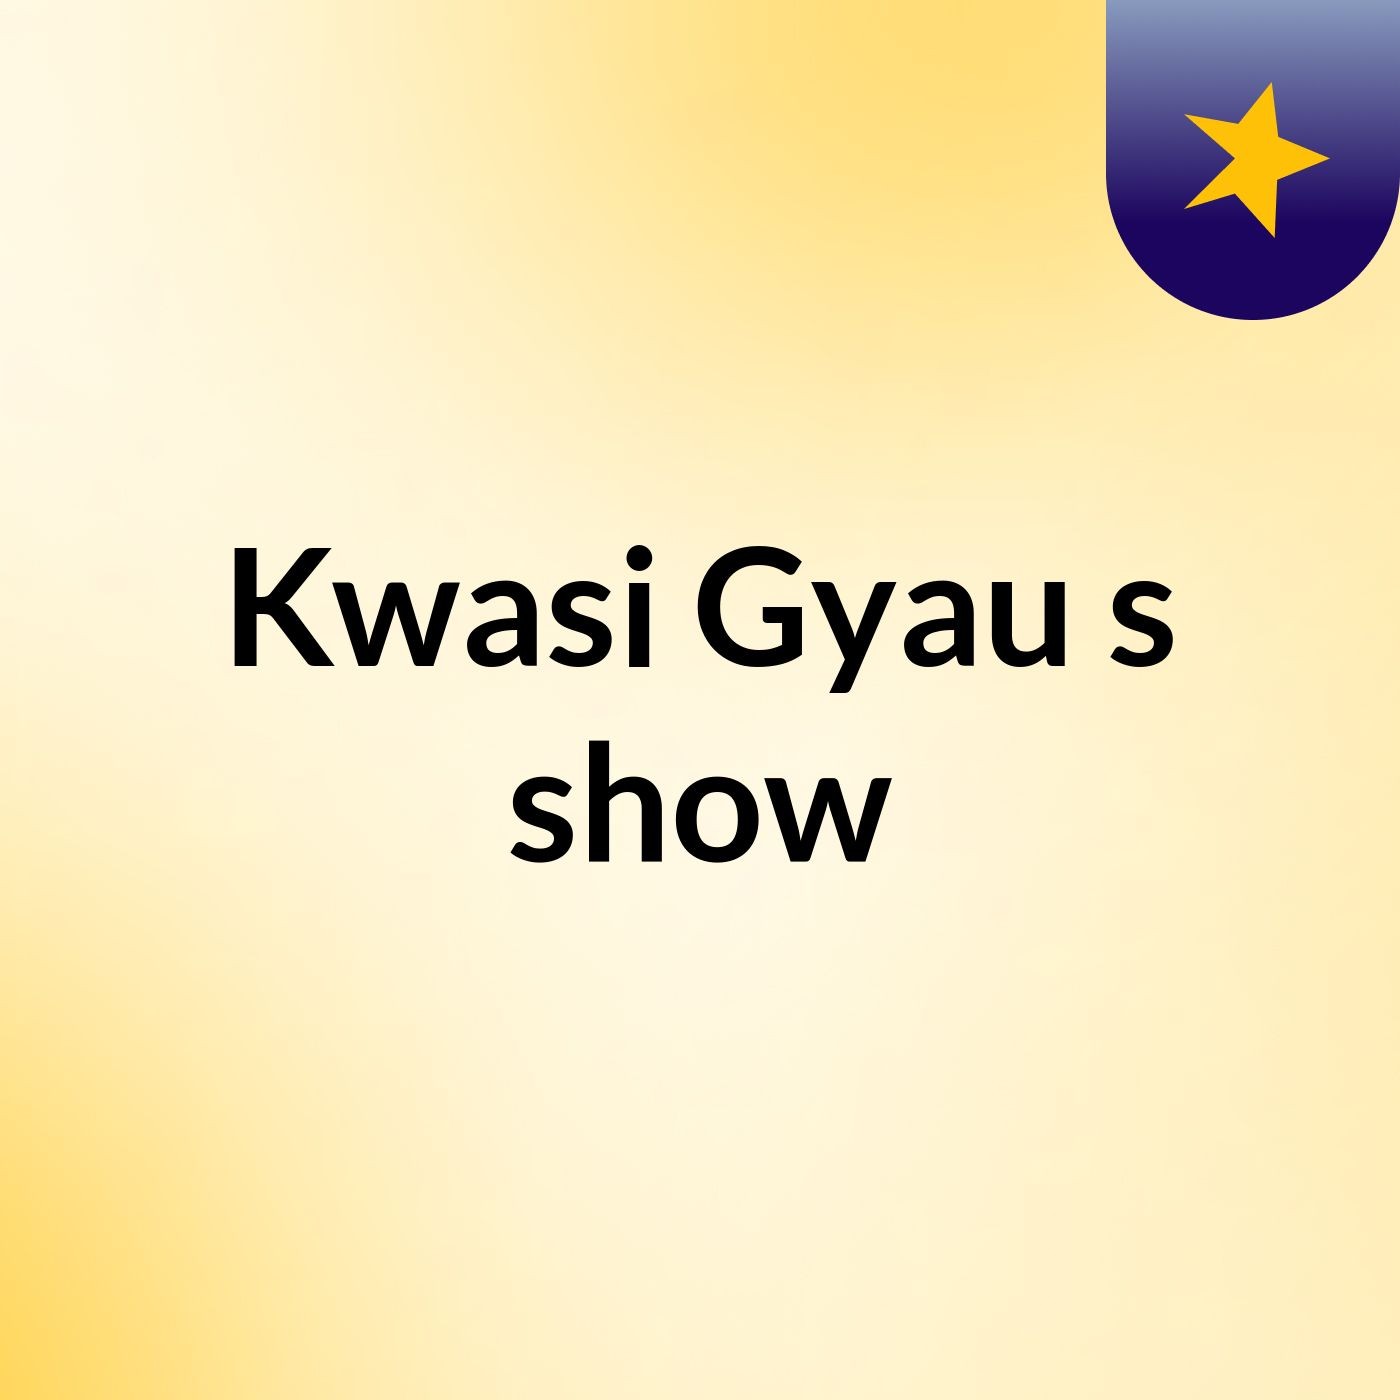 Kwasi Gyau's show